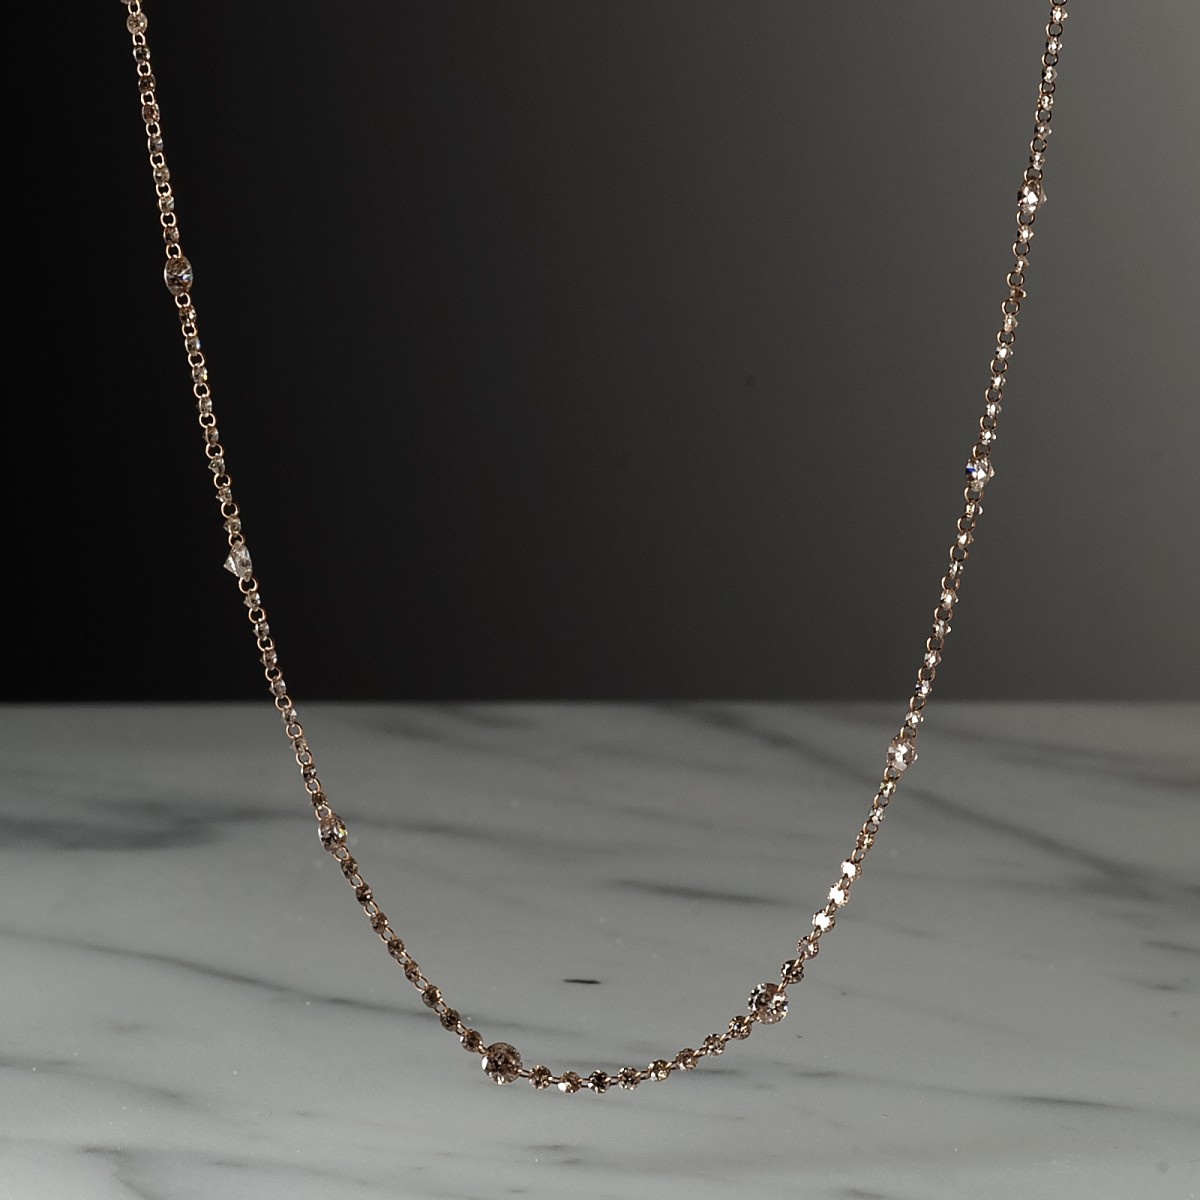 JESS 2043 - Handmade necklace